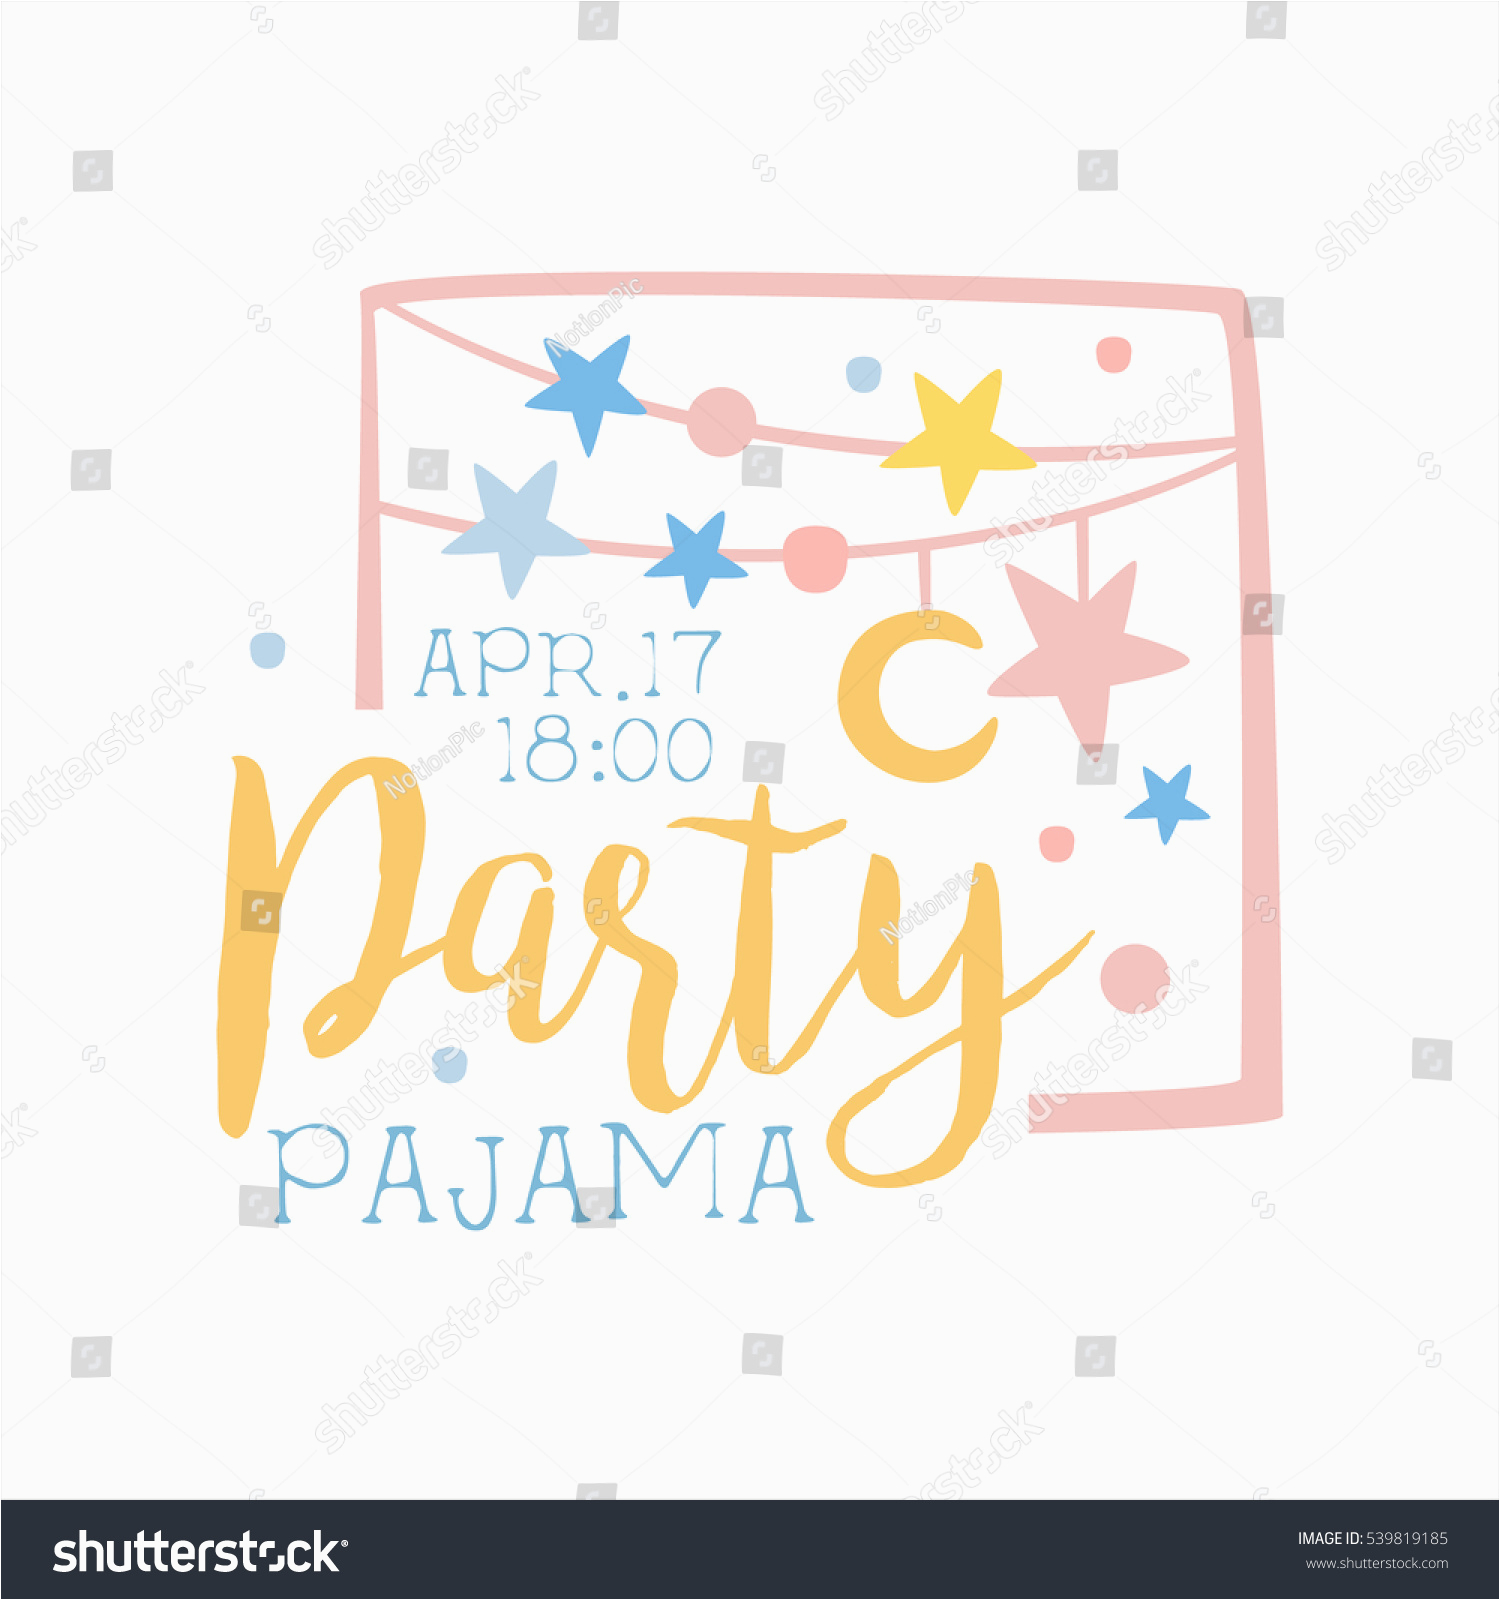 girly pajama party invitation card template 539819185 src vece0eealevruldbhizrug 3 30